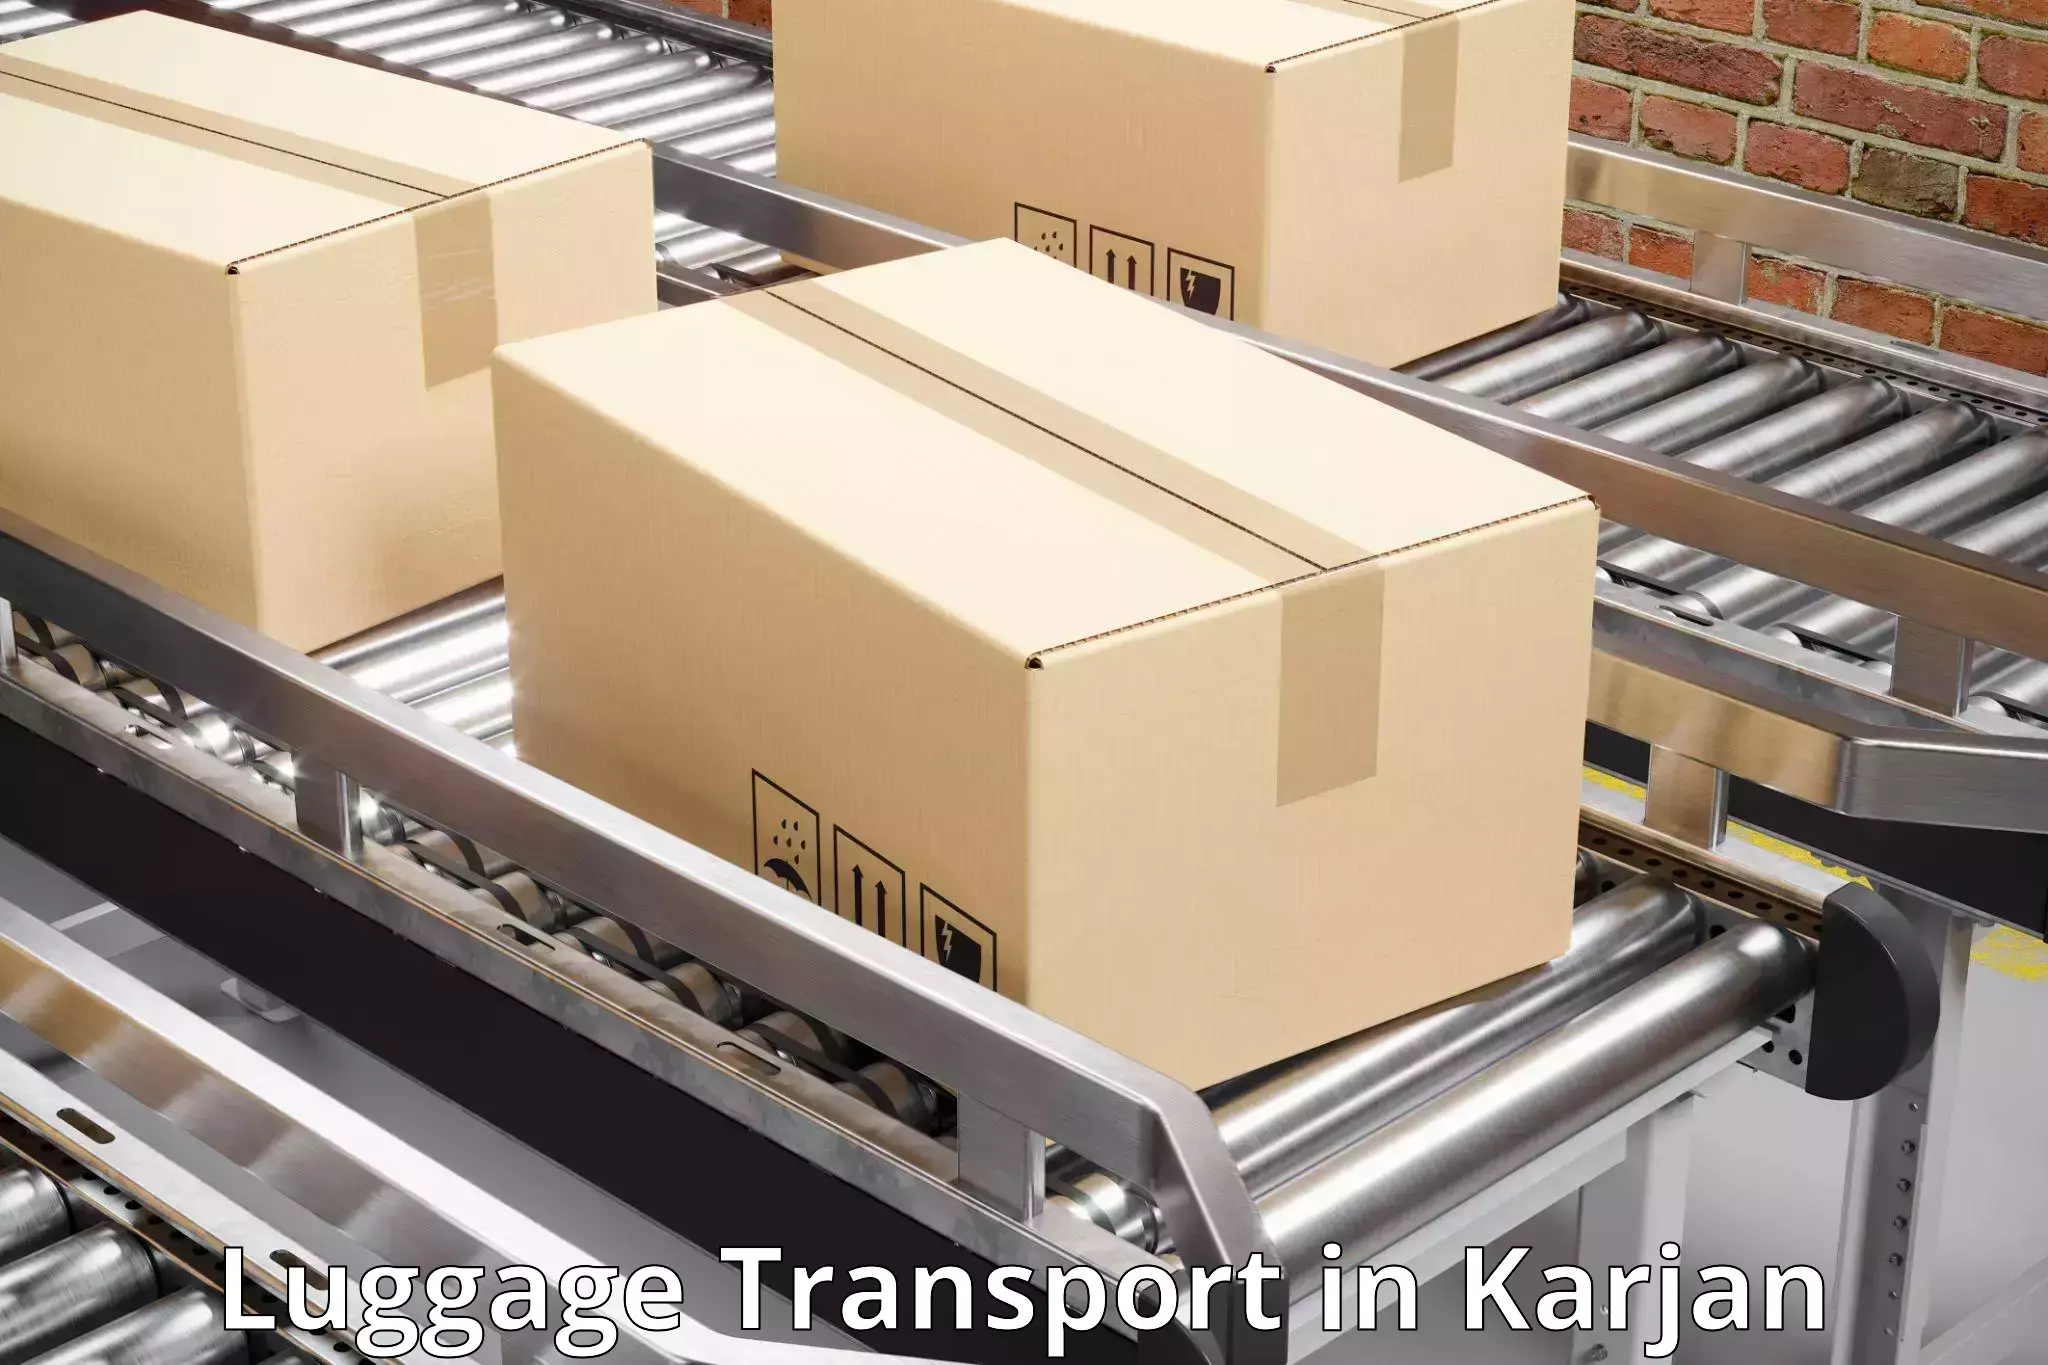 Hotel to Door baggage transport in Karjan